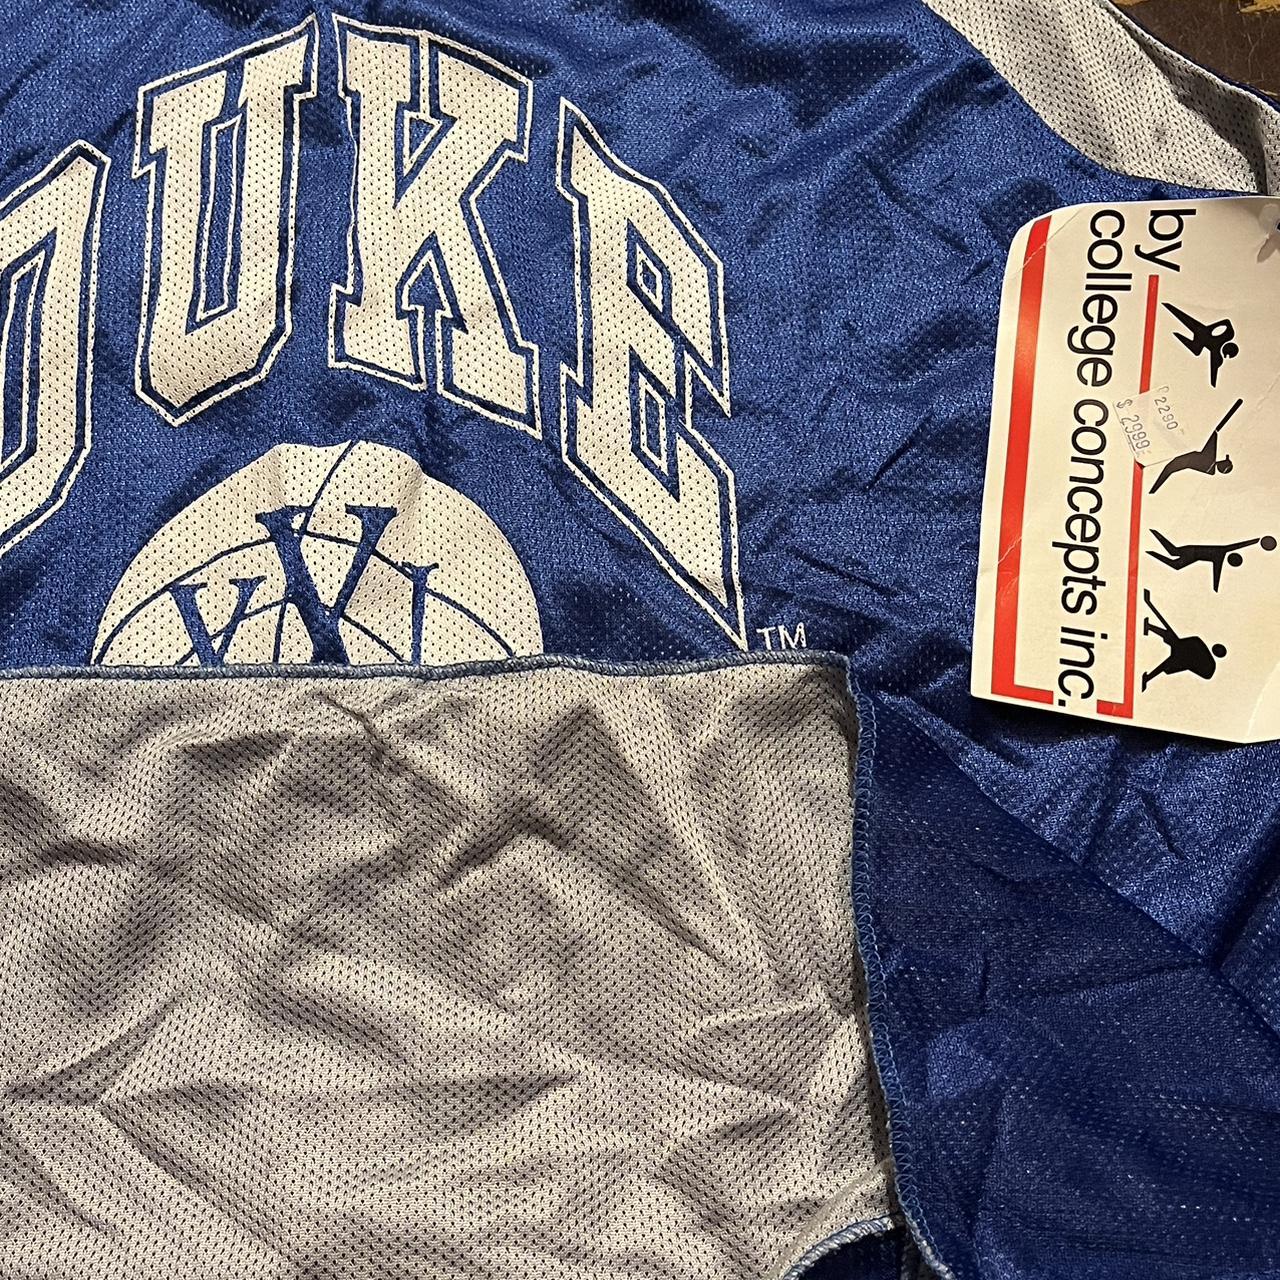 Nike Elite Duke Blue Devils NCAAM Basketball Jersey - Depop